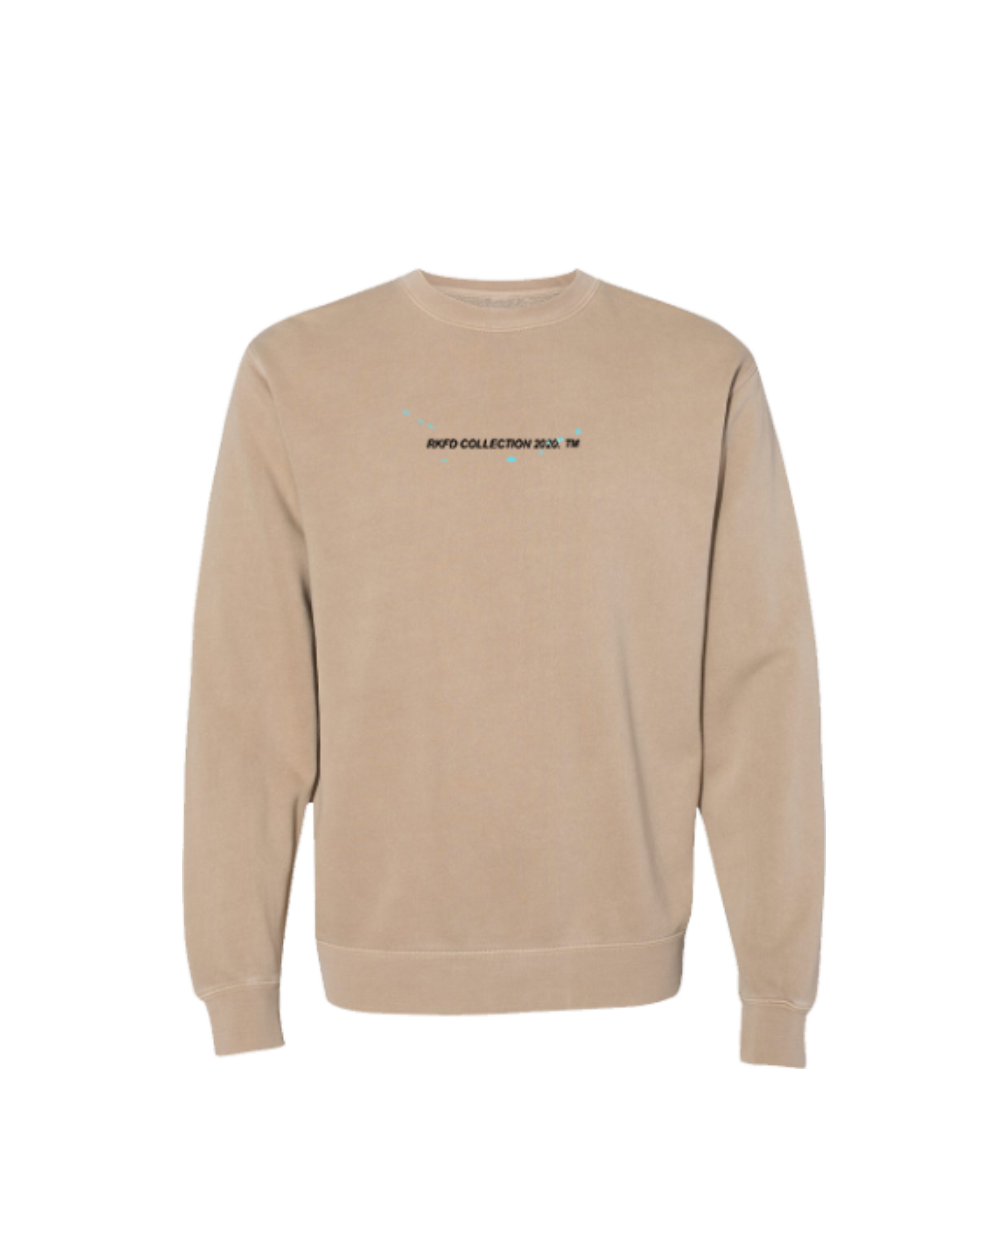 Splatter Crewneck Sweater (Sandstone)